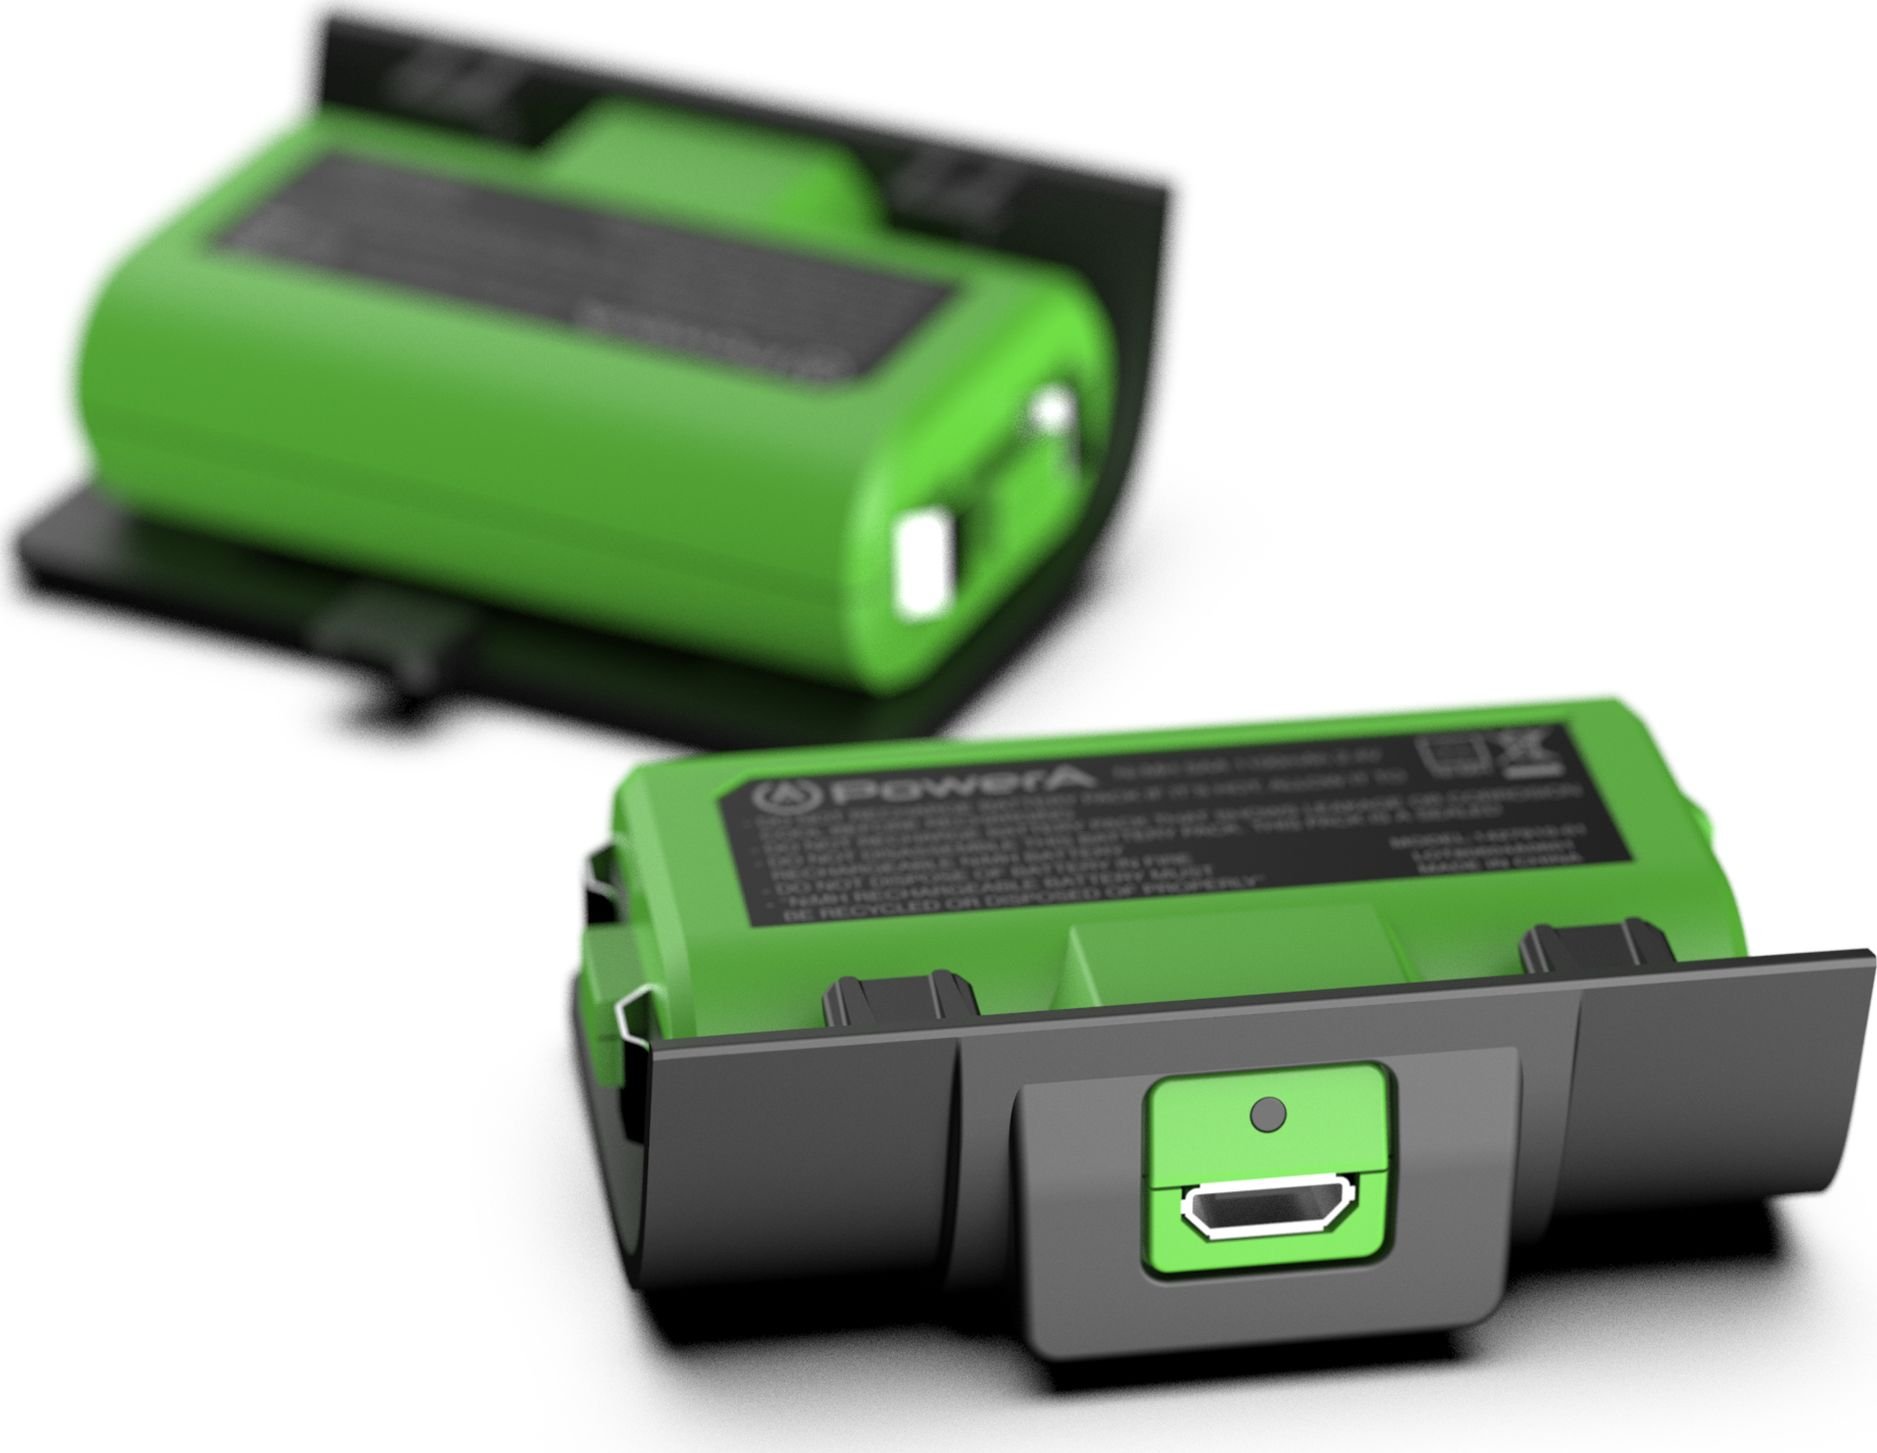 Pachet de baterii reincarcabile Play & Charge Kit PowerA Xbox Series X|S, Xbox One